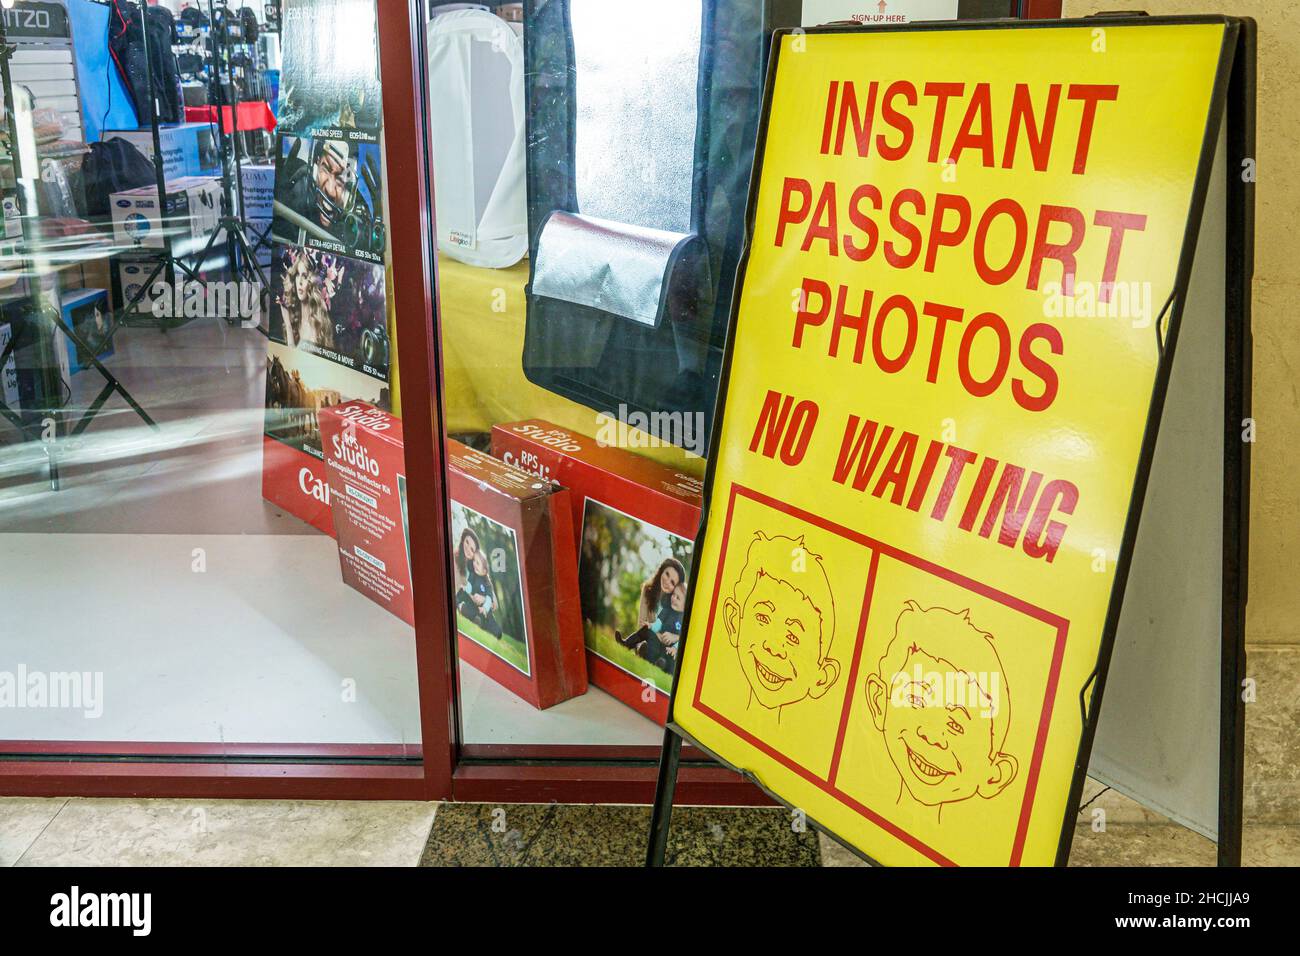 West Palm Beach Florida business sign instant passport photos no waiting Stock Photo